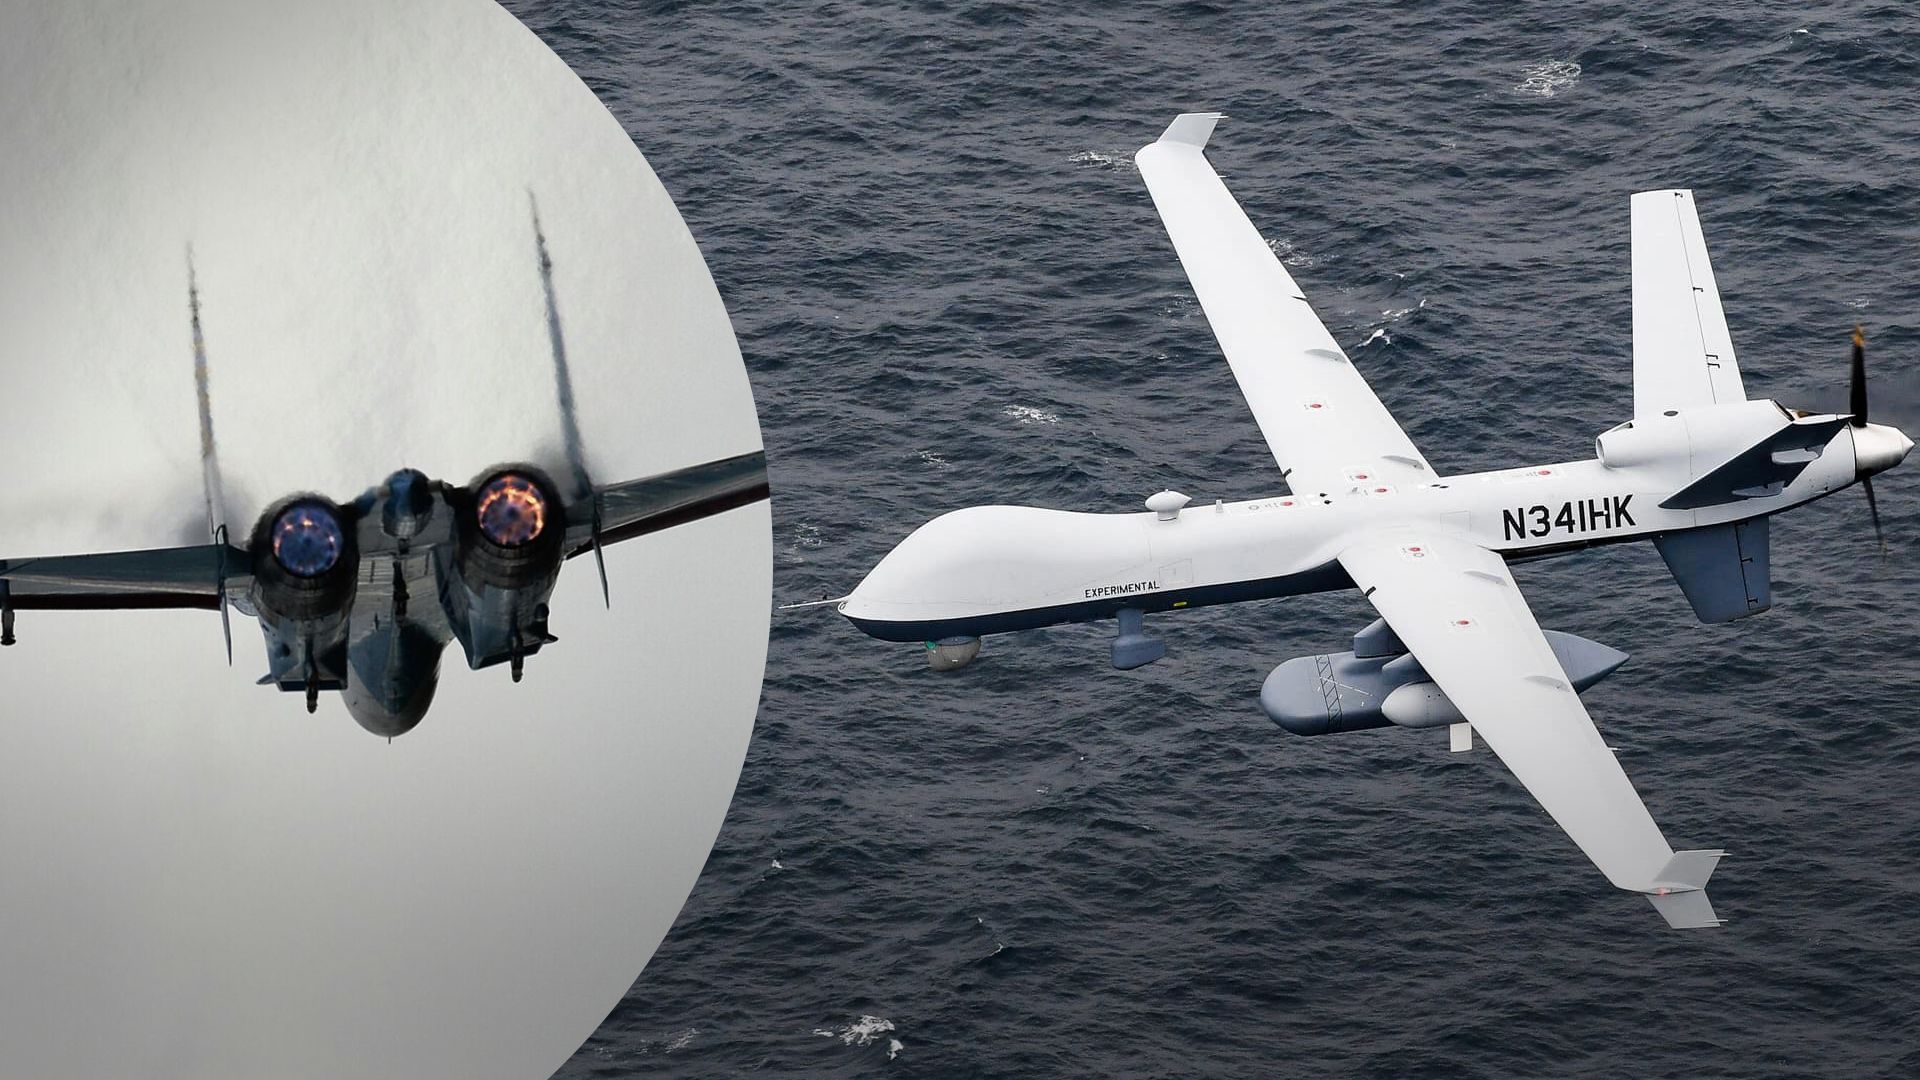 MQ-9 Reaper сбили над Черным морем - СМИ смоделировали атаку Су-27 на БПЛА